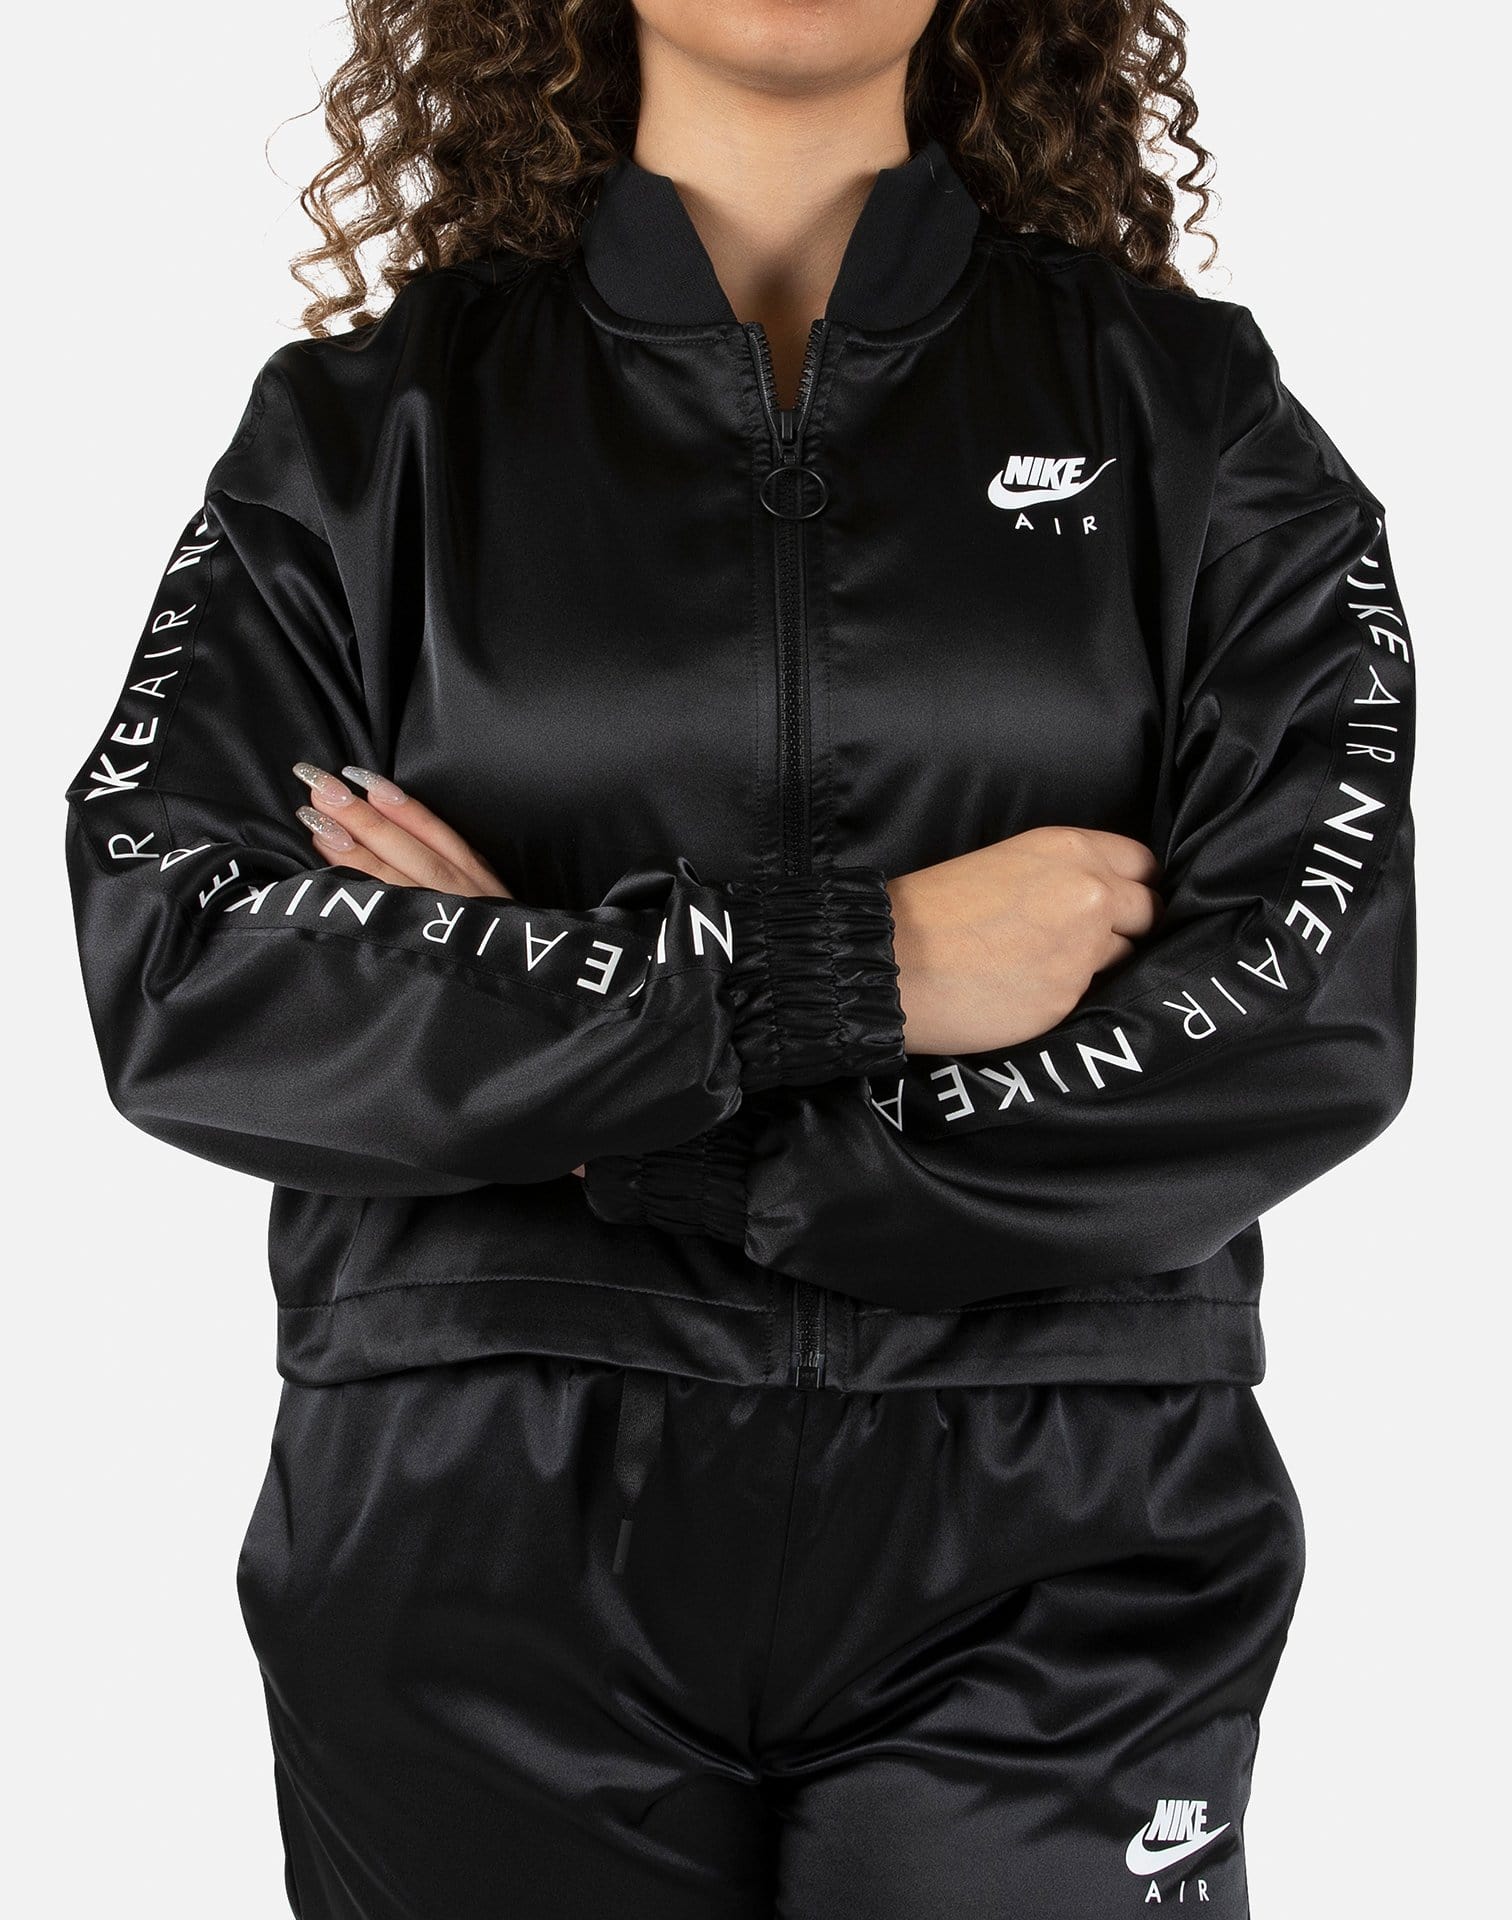 women's satin track jacket nike air